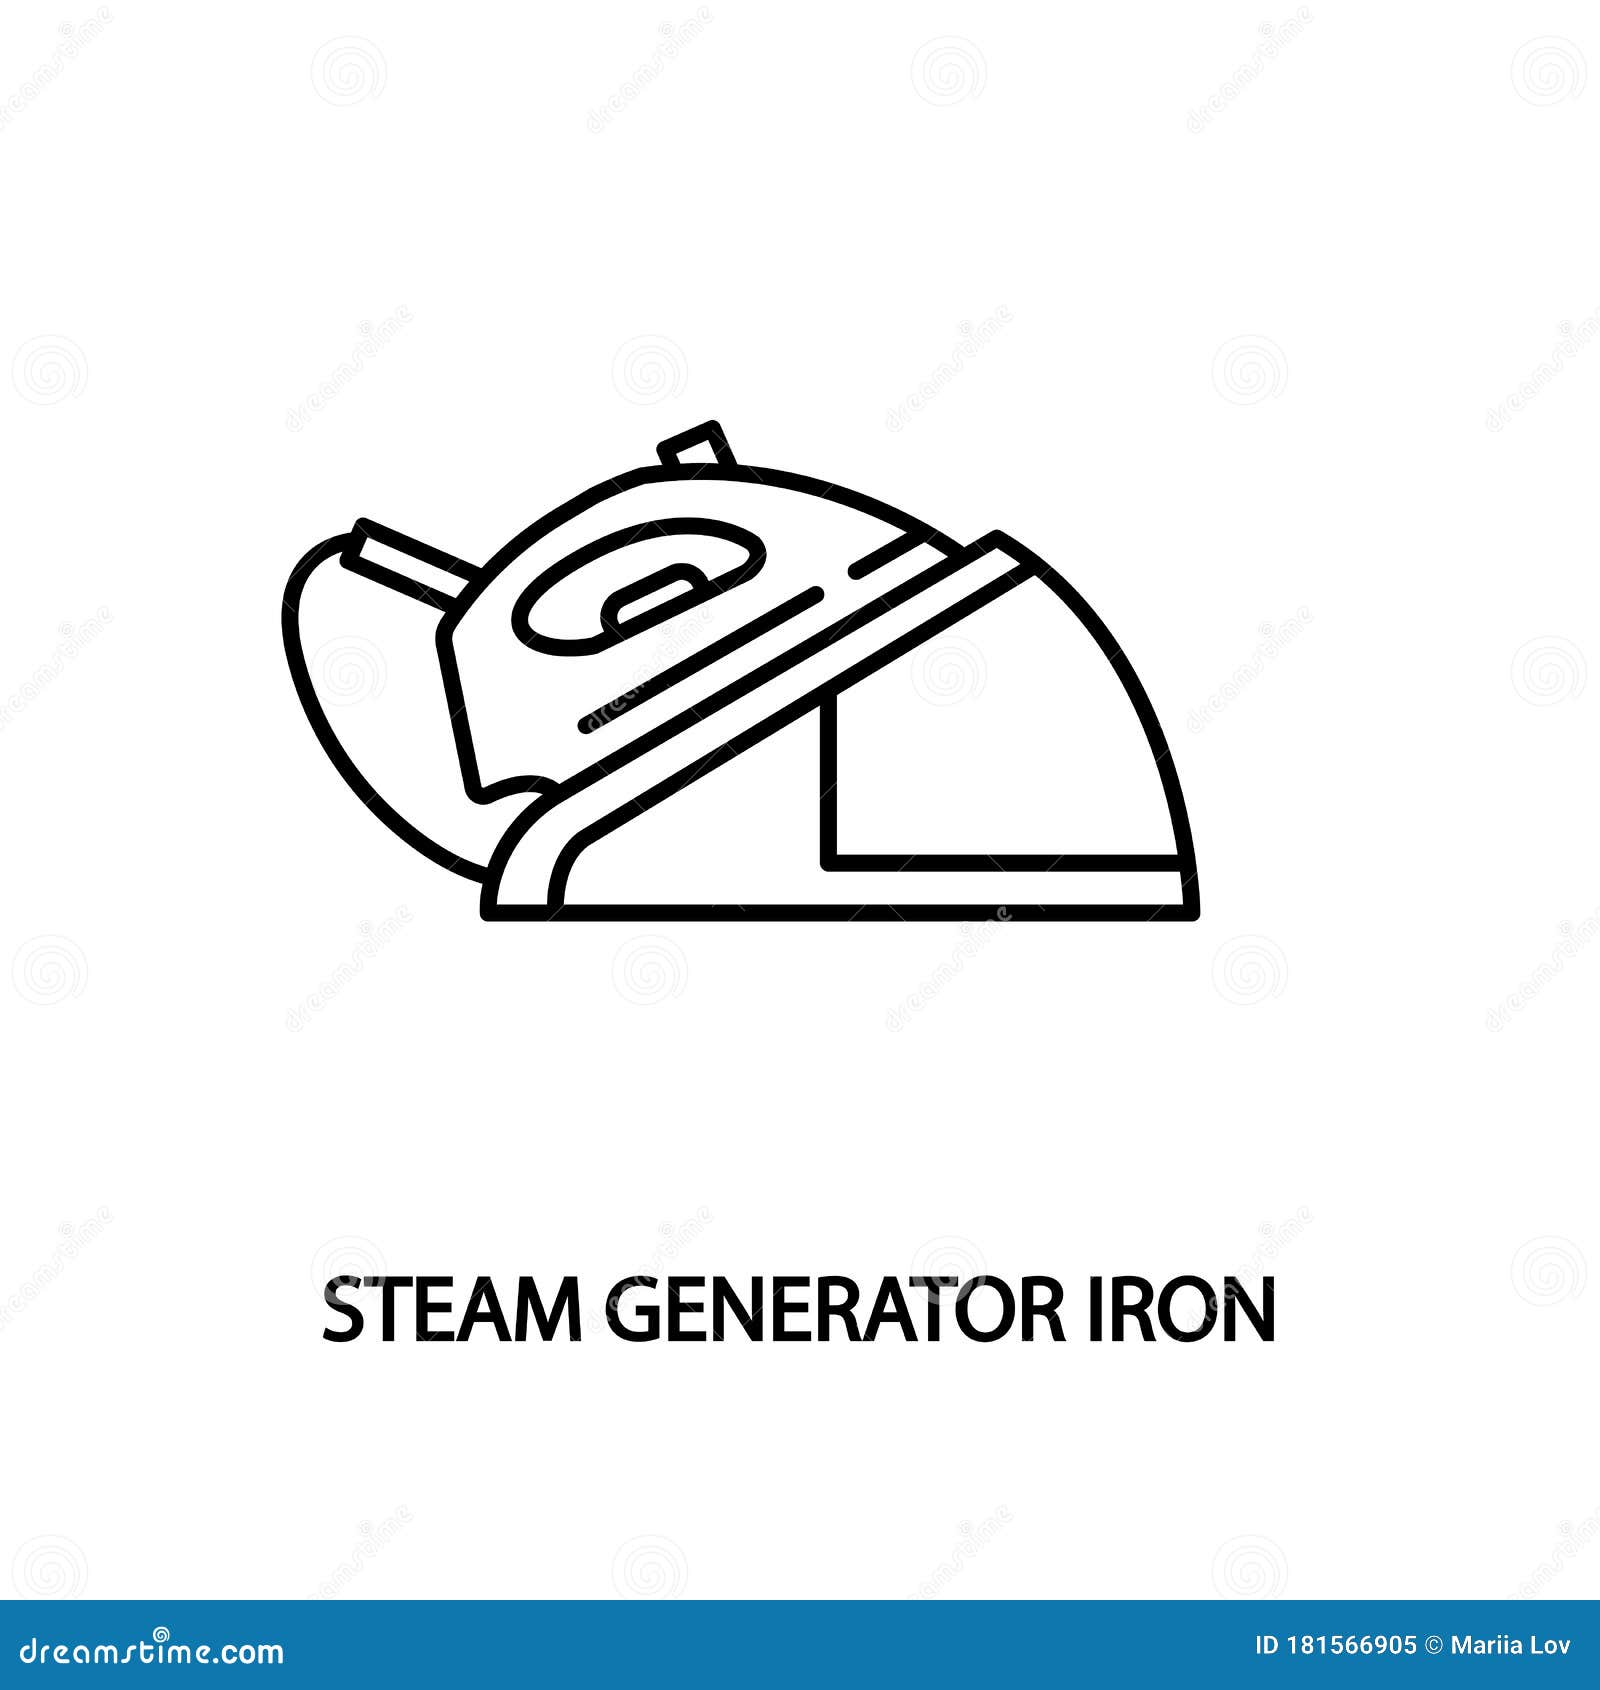 Electrical generator steam фото 92